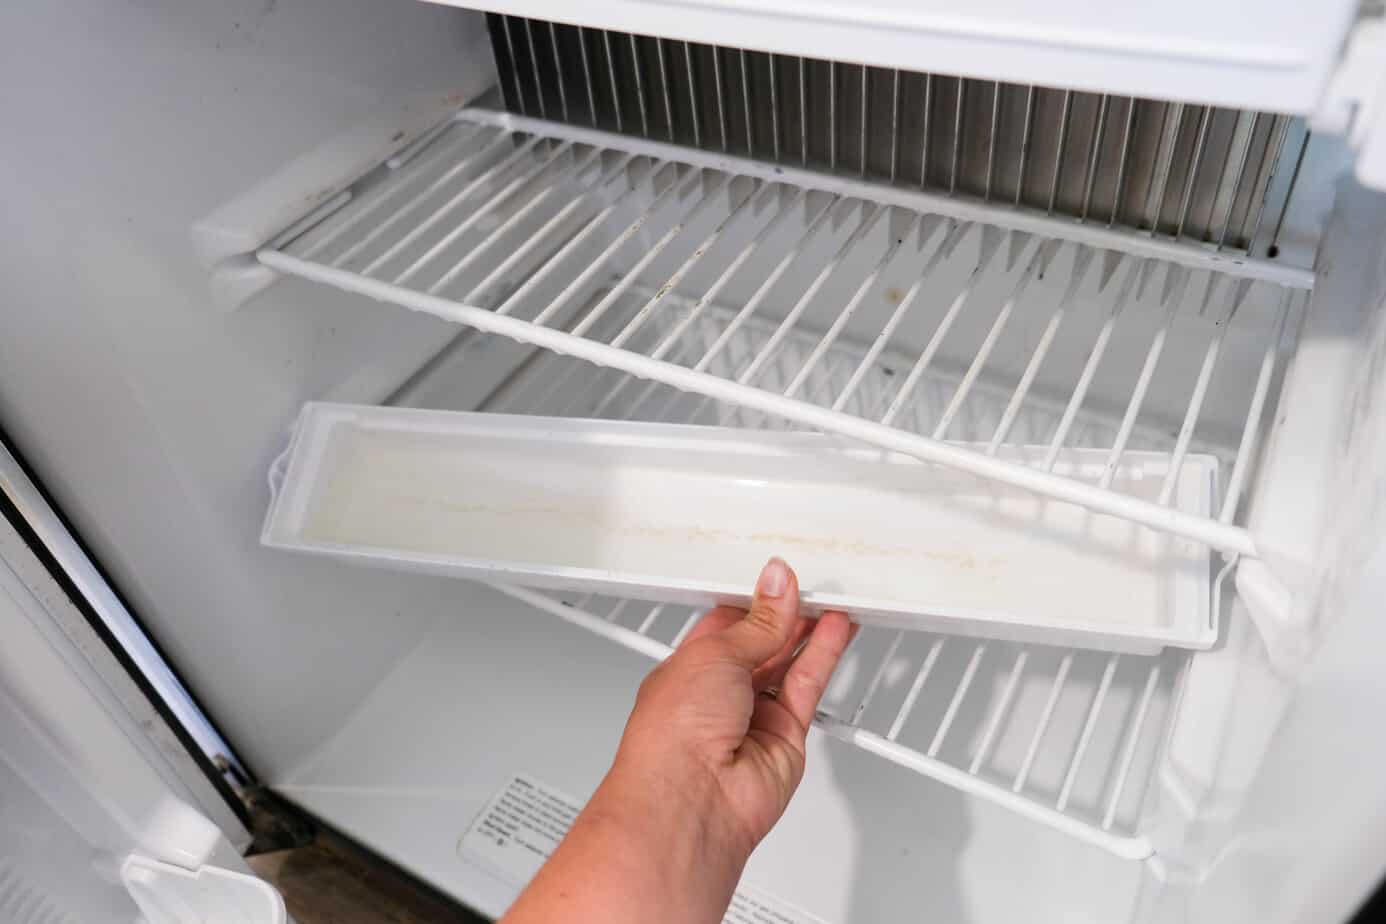 2Pcs Refrigerator Drip Catcher Tray Mini Fridge Drip Tray Protects Ice and  Water Dispenser Pan Fridge Spills Water Pad 